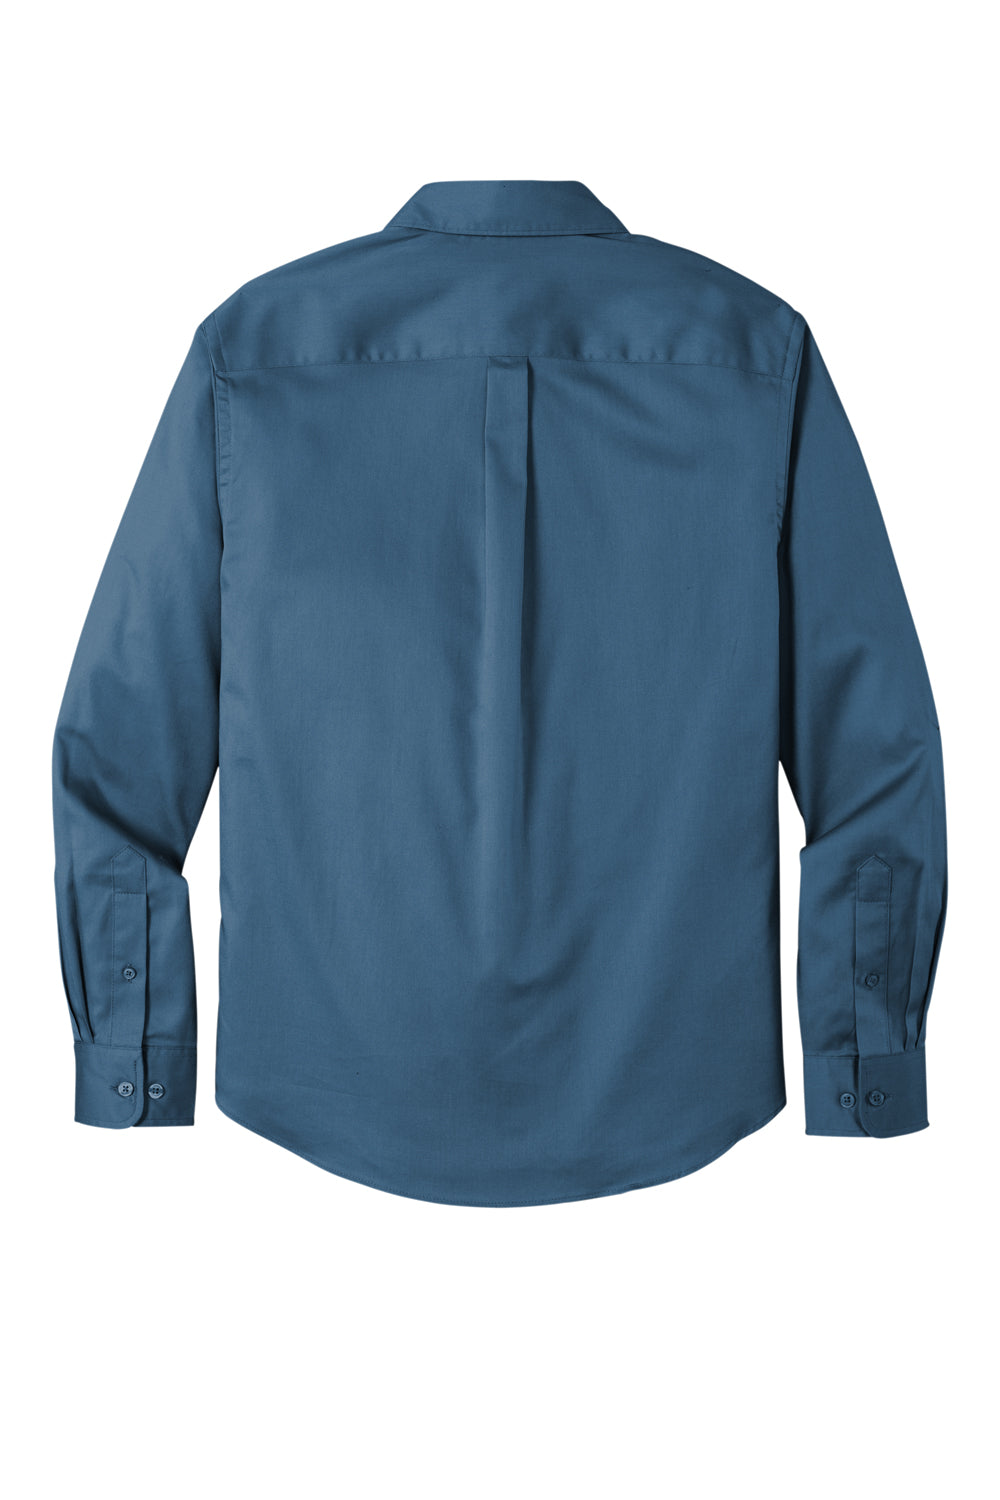 Port Authority W808 SuperPro Wrinkle Resistant React Long Sleeve Button Down Shirt w/ Pocket Regatta Blue Flat Back